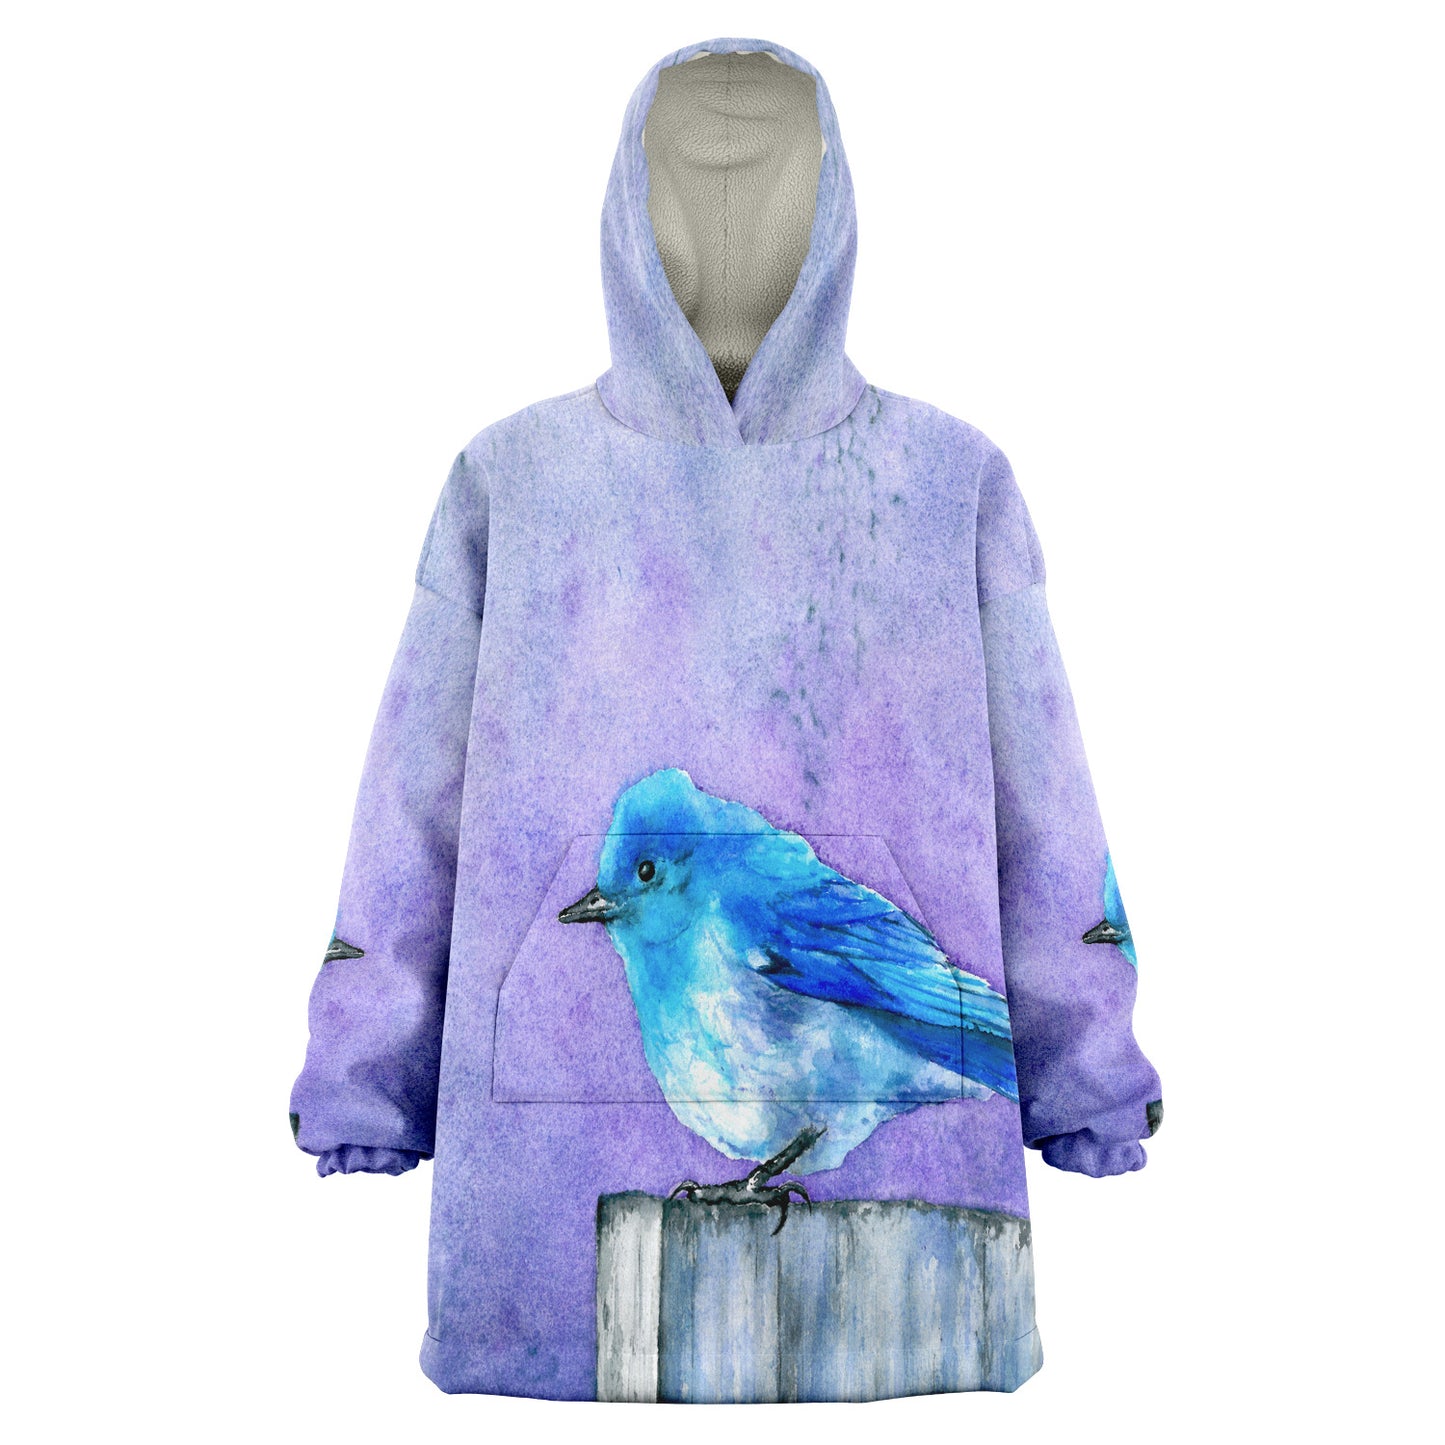 Bluebird Bliss Snug Hoodie Wearable Blanket